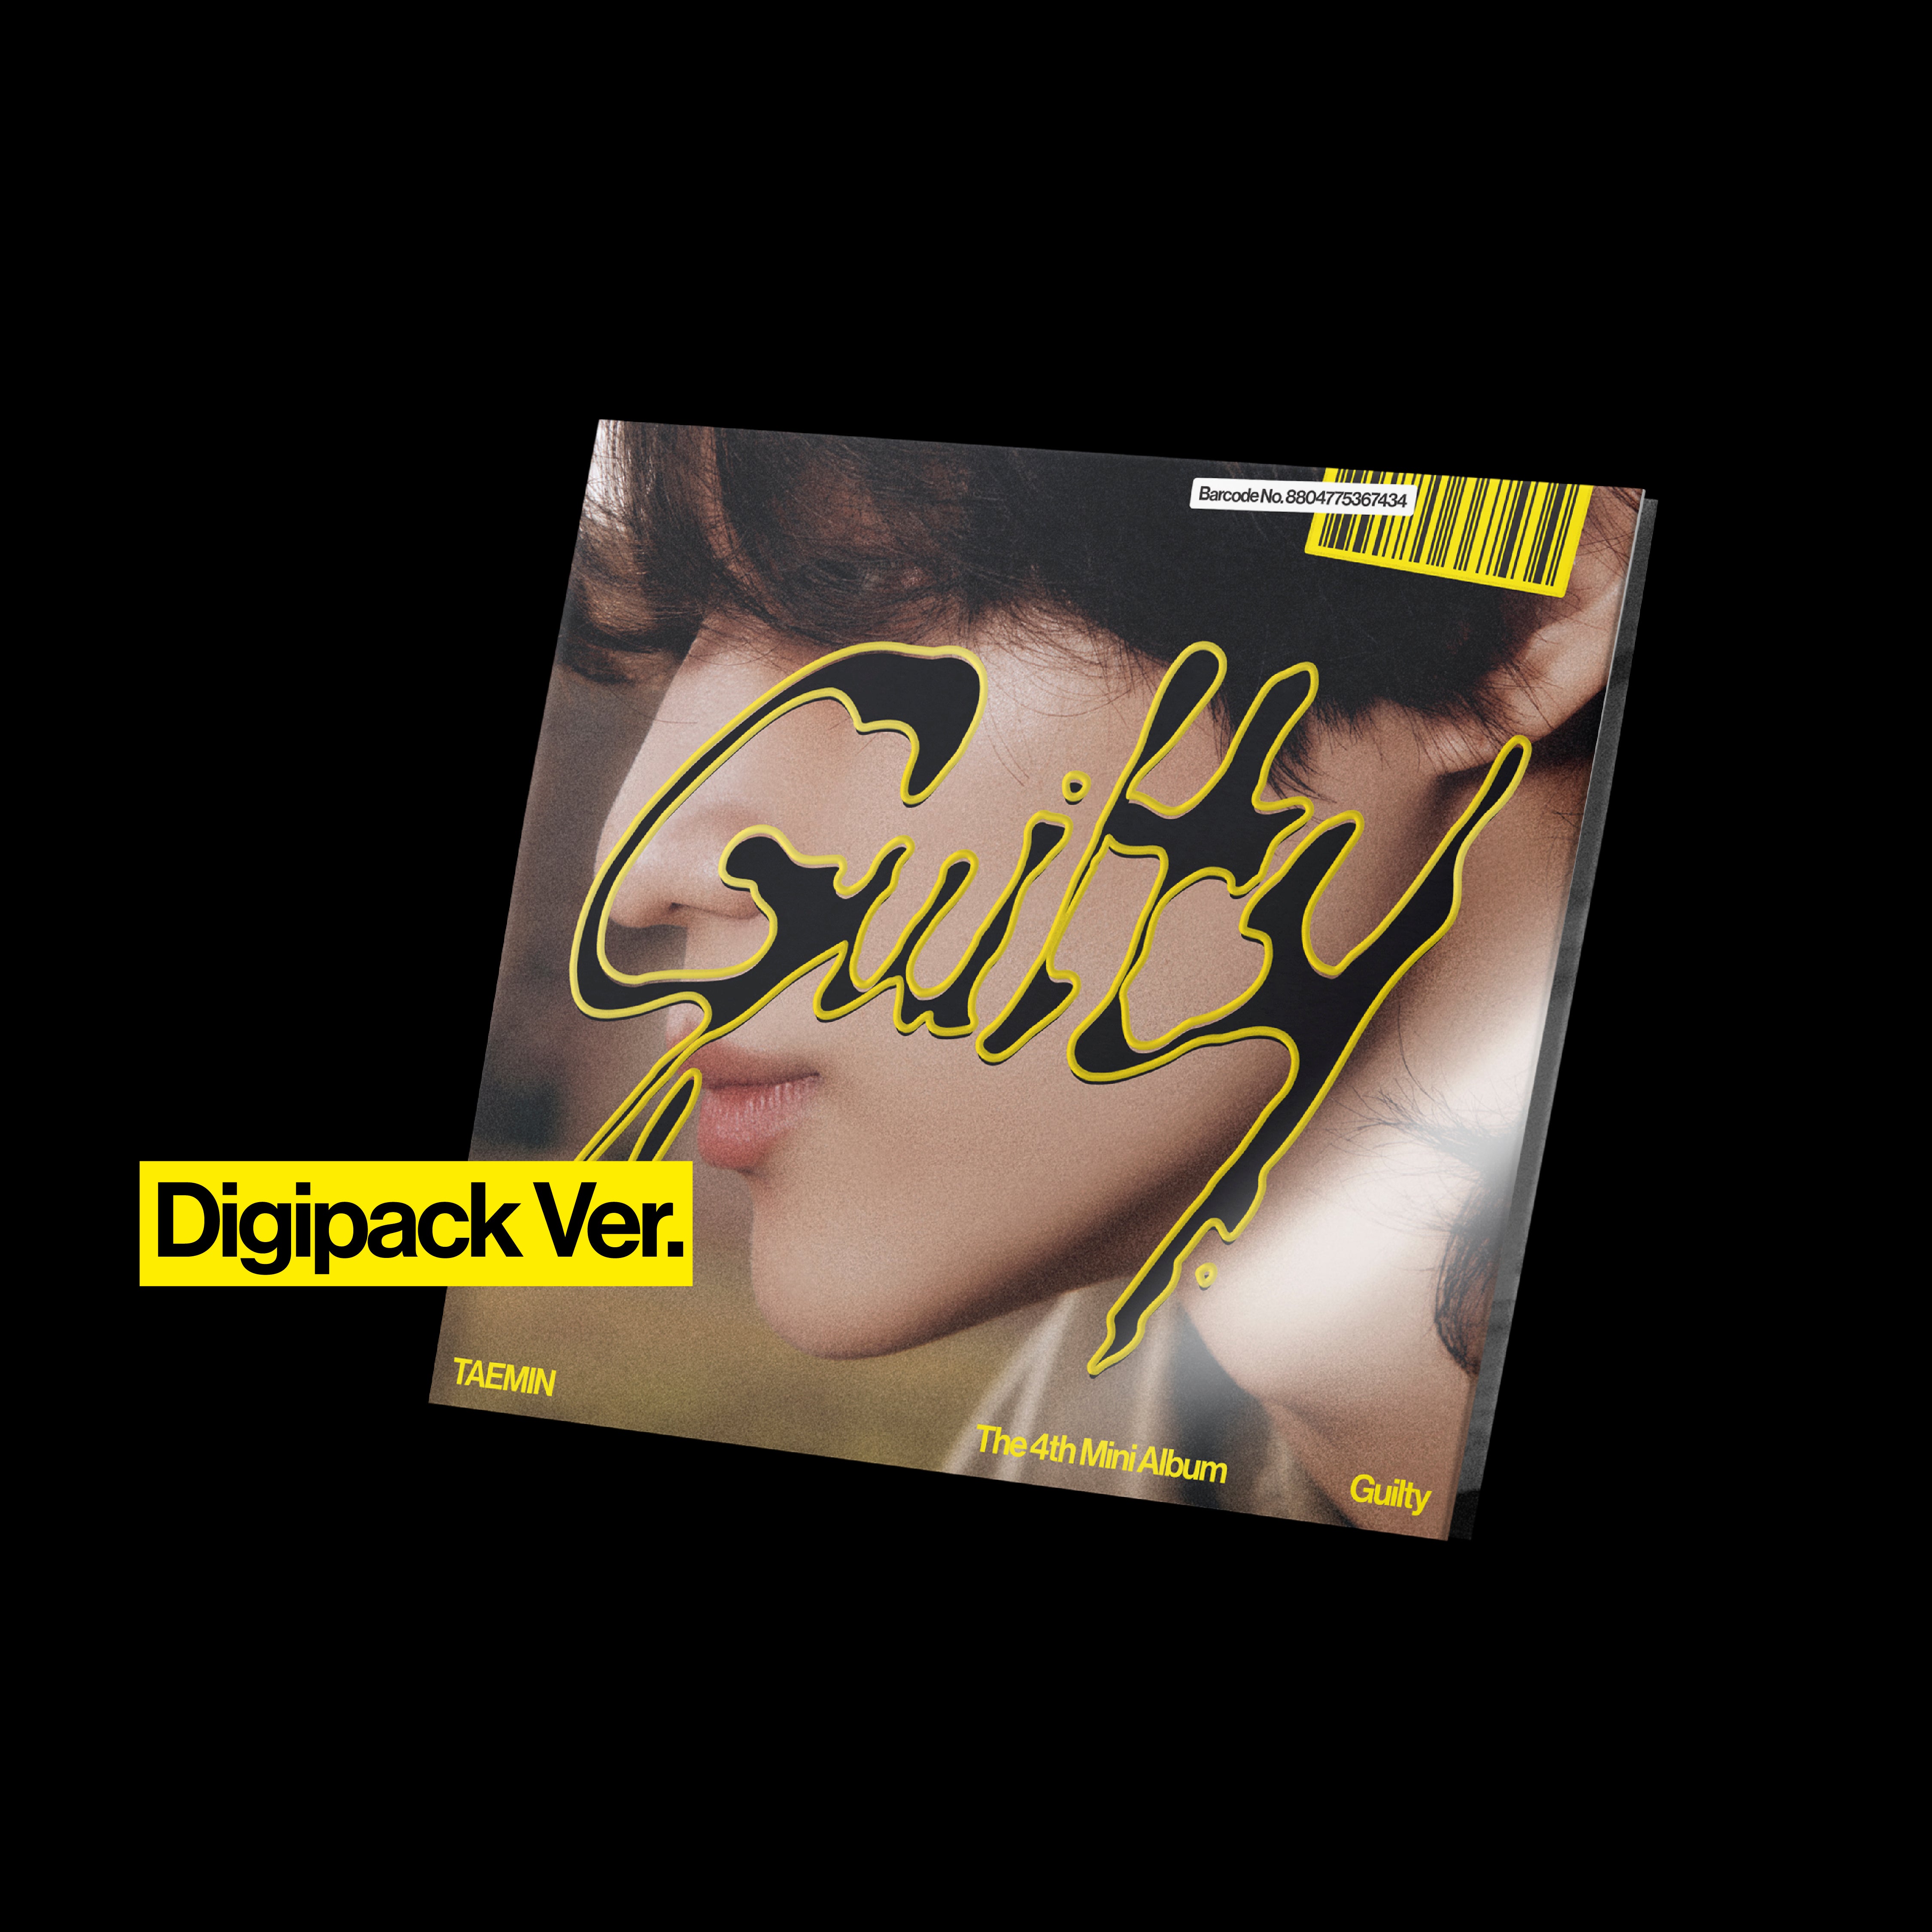 The 4th Mini Album 'Guilty' (Digipack Ver.) - Random